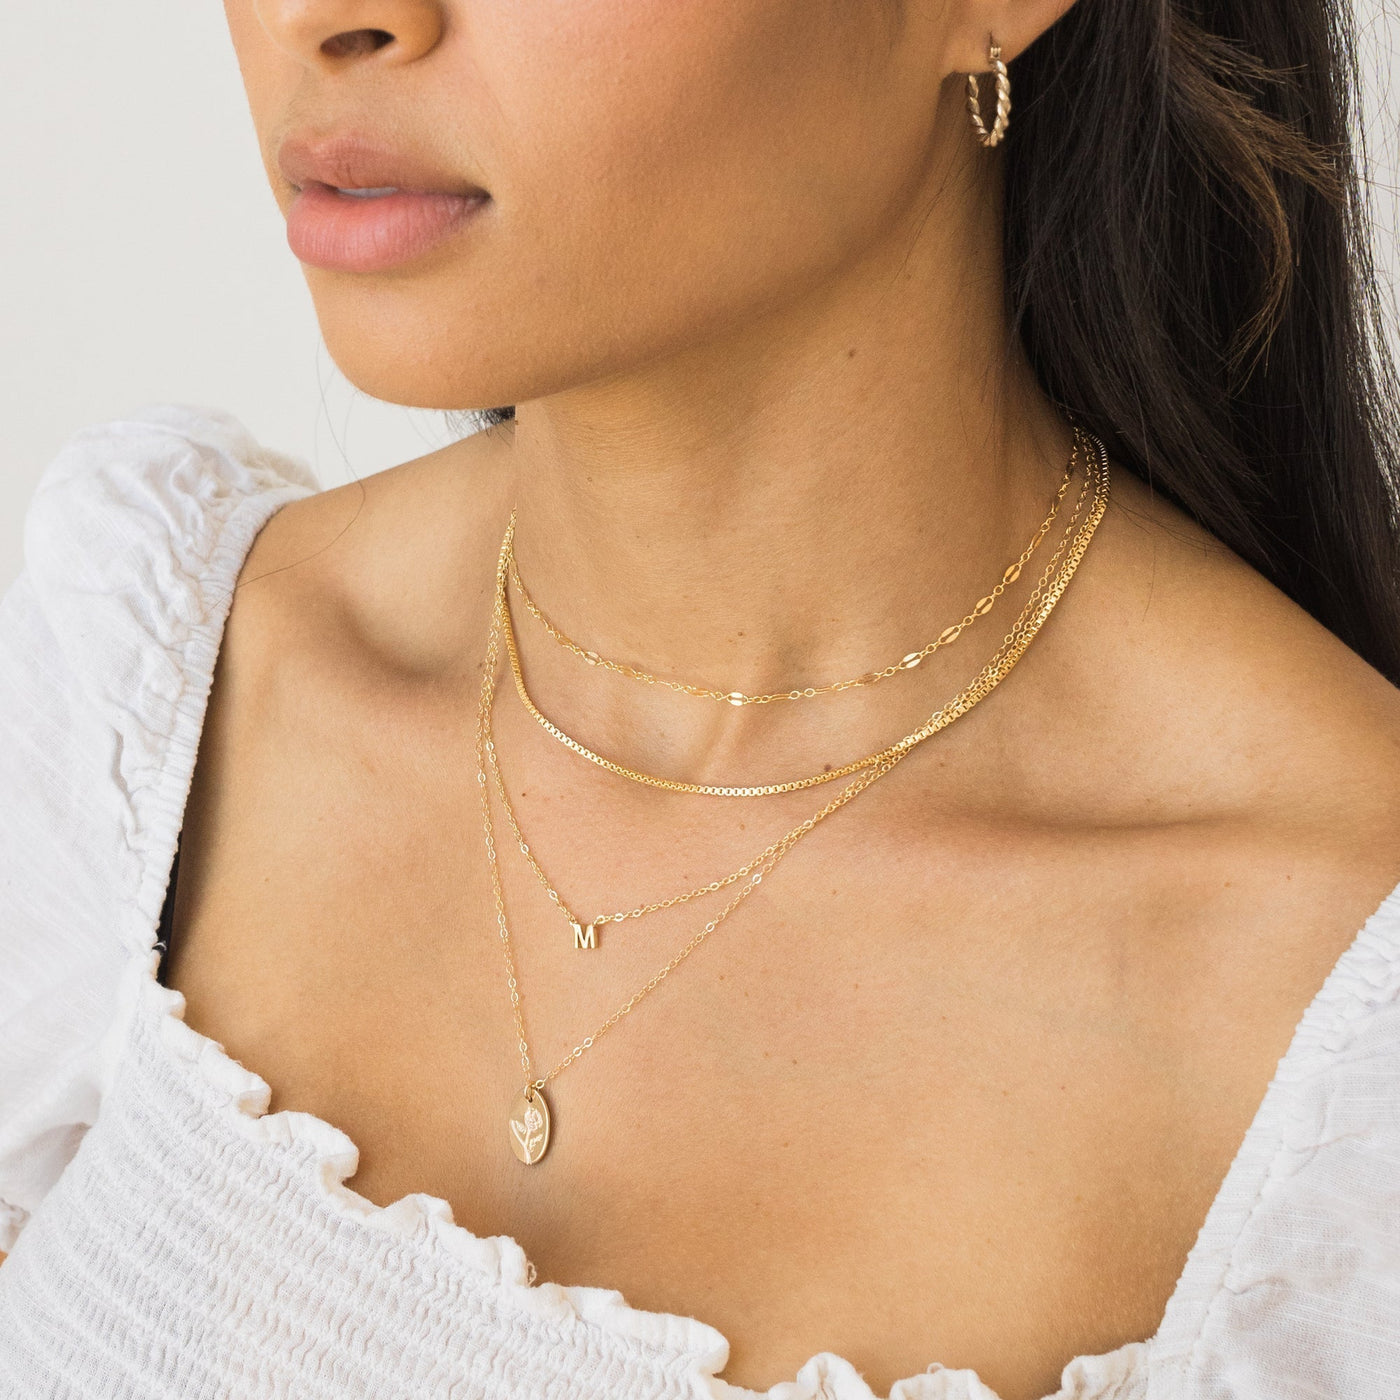 Tiny Initial Necklace | Simple & Dainty Jewelry